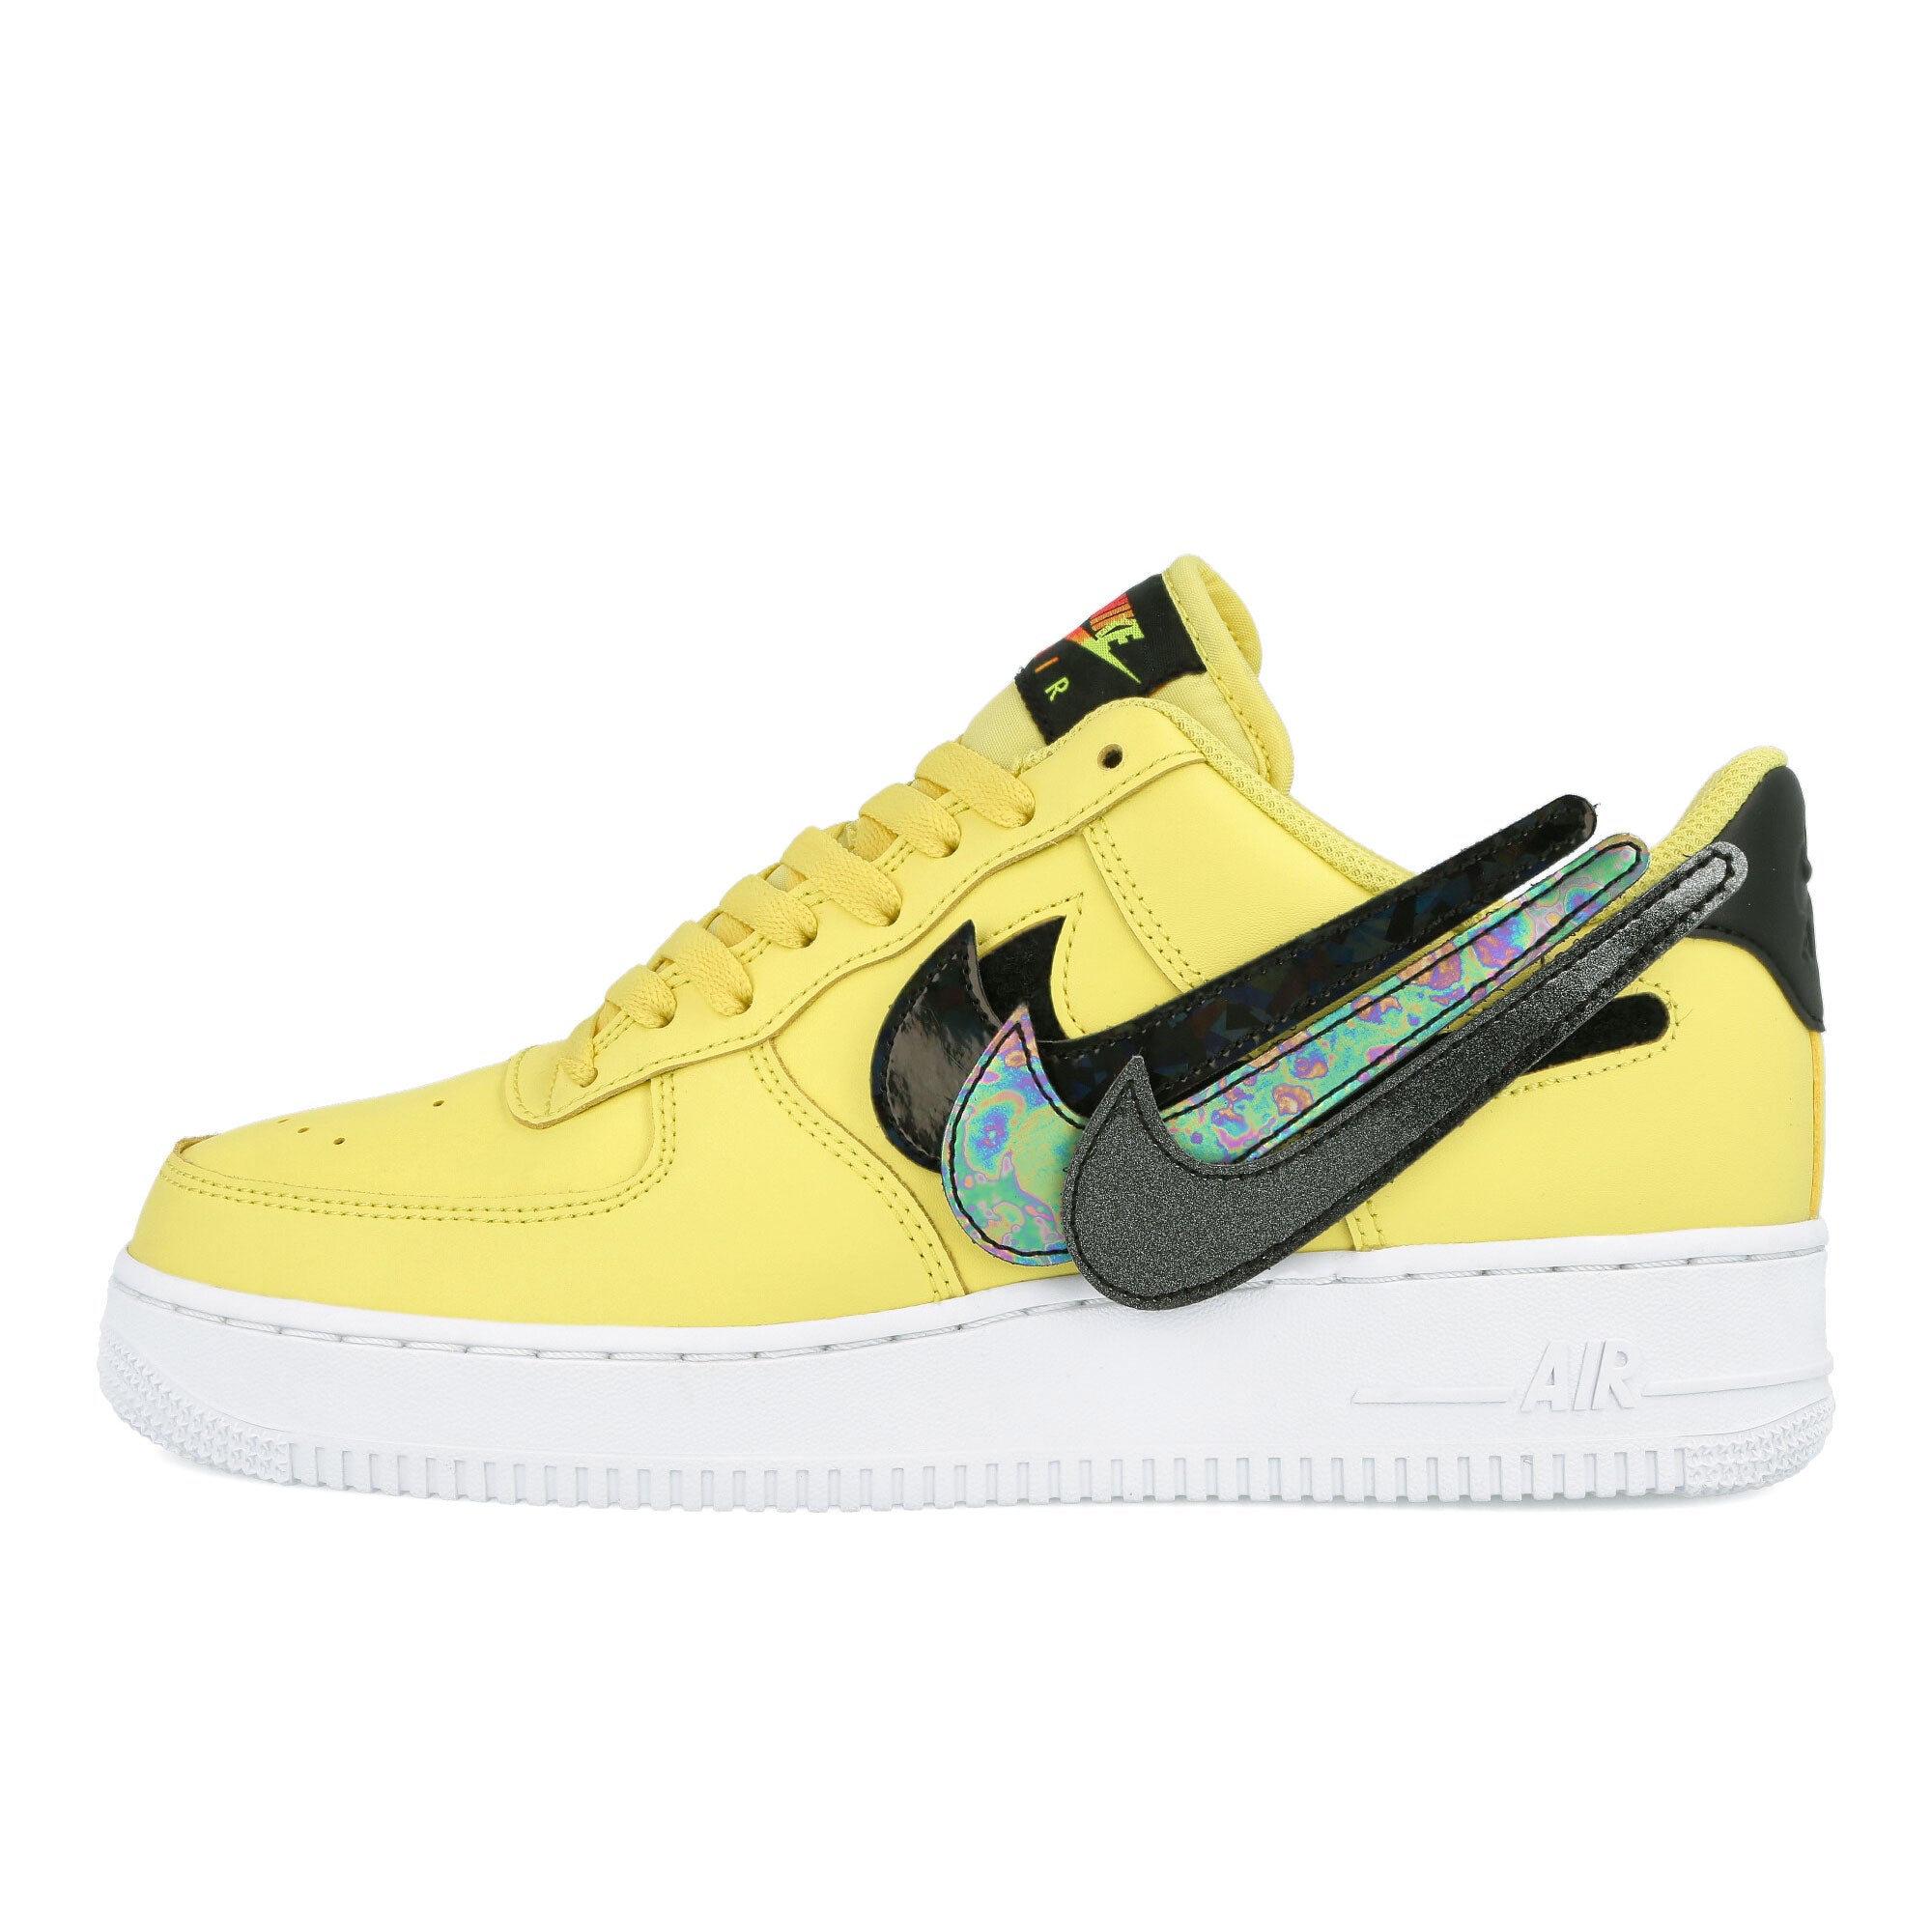 Nike Air Force 1 LV8 3 Big Kids' Shoe Size 4Y (Yellow/White) AR7446-700